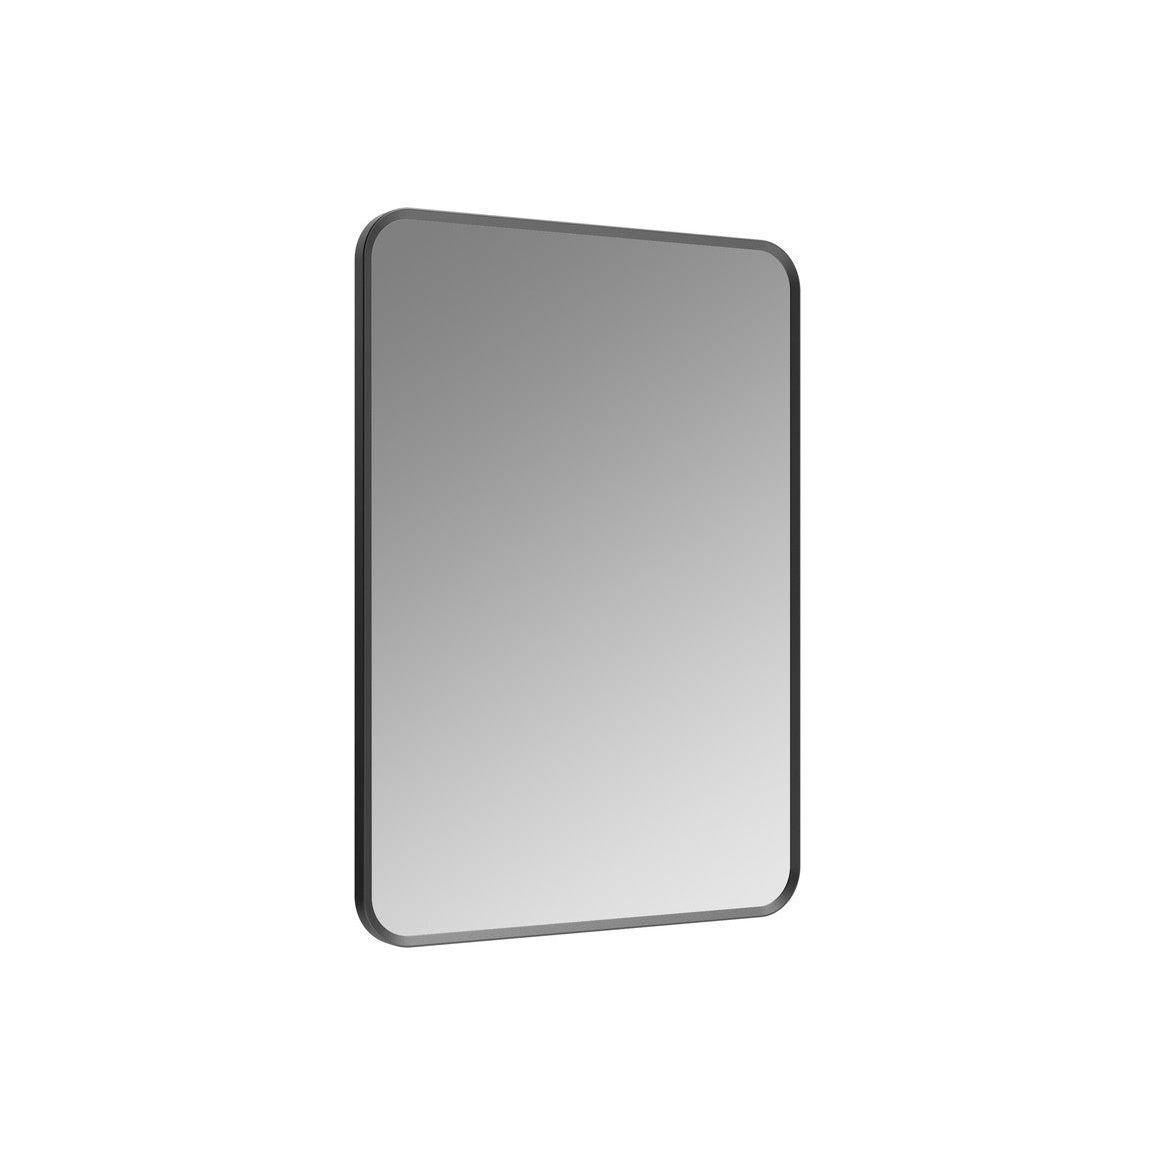 Espejo rectangular Sangha de 600x800 mm - Negro mate